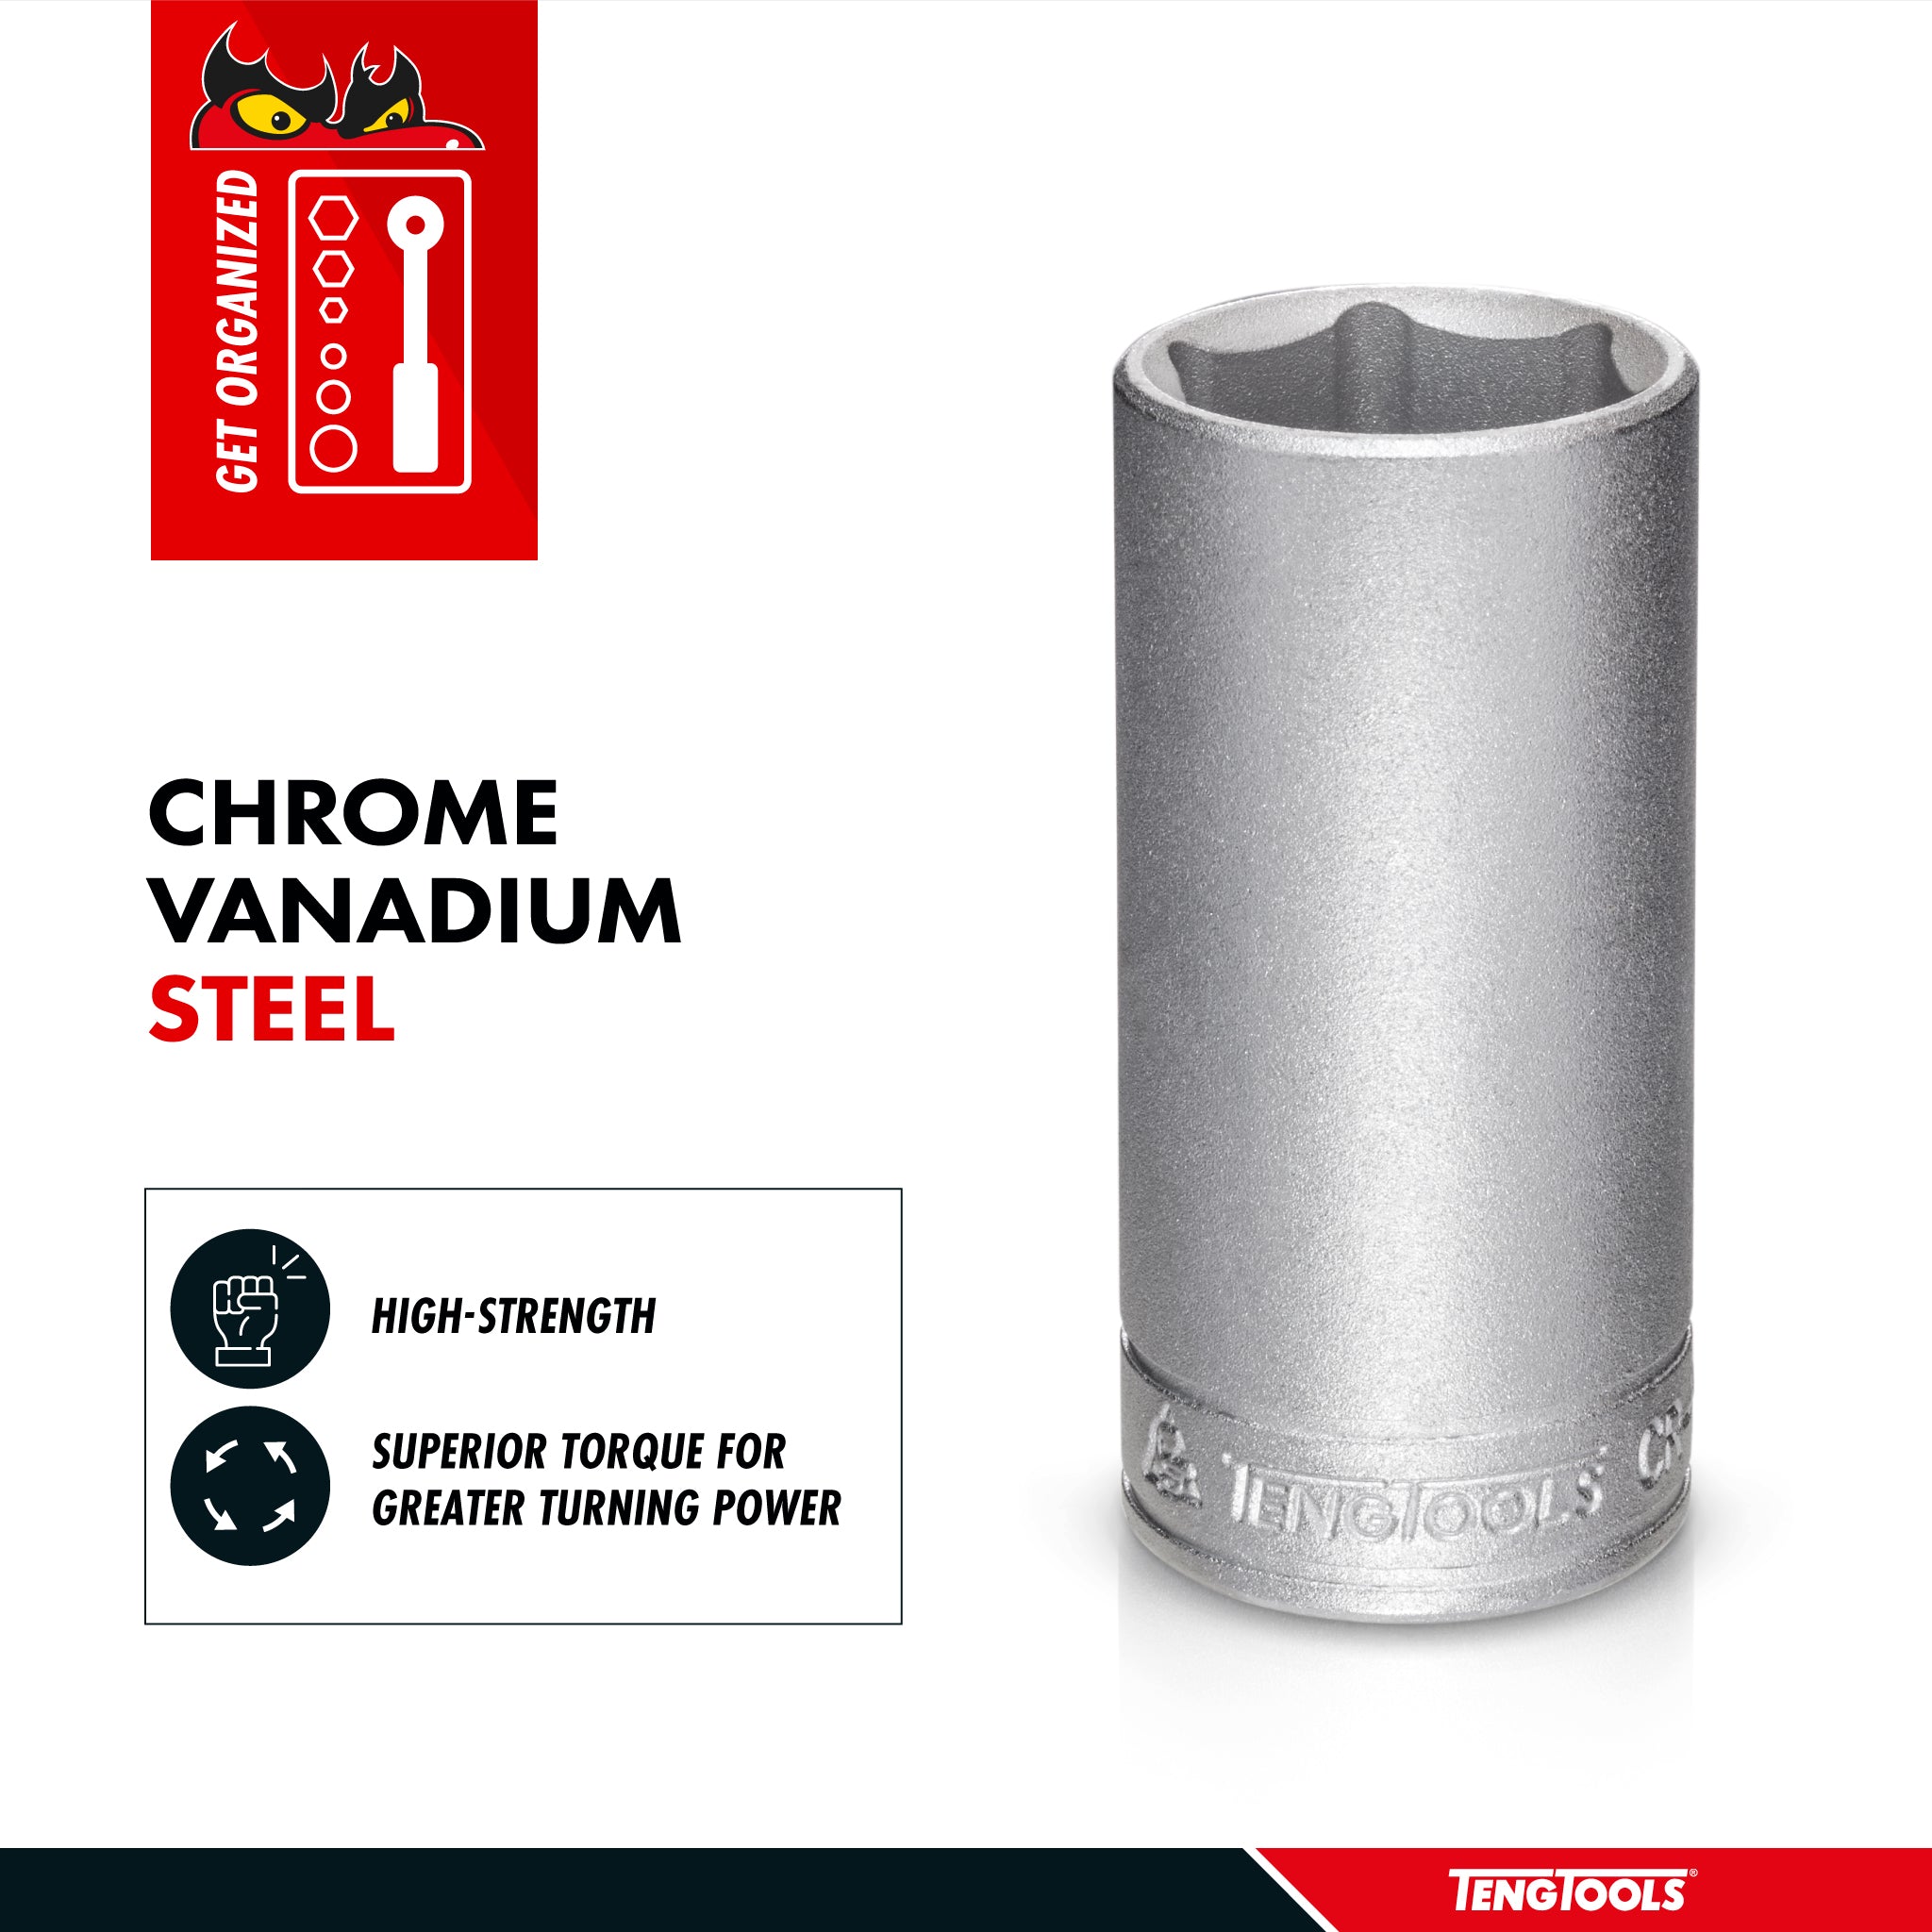 Teng Tools 6 Point SAE Deep 1/4 Inch Drive Chrome Vanadium Sockets - 1/2